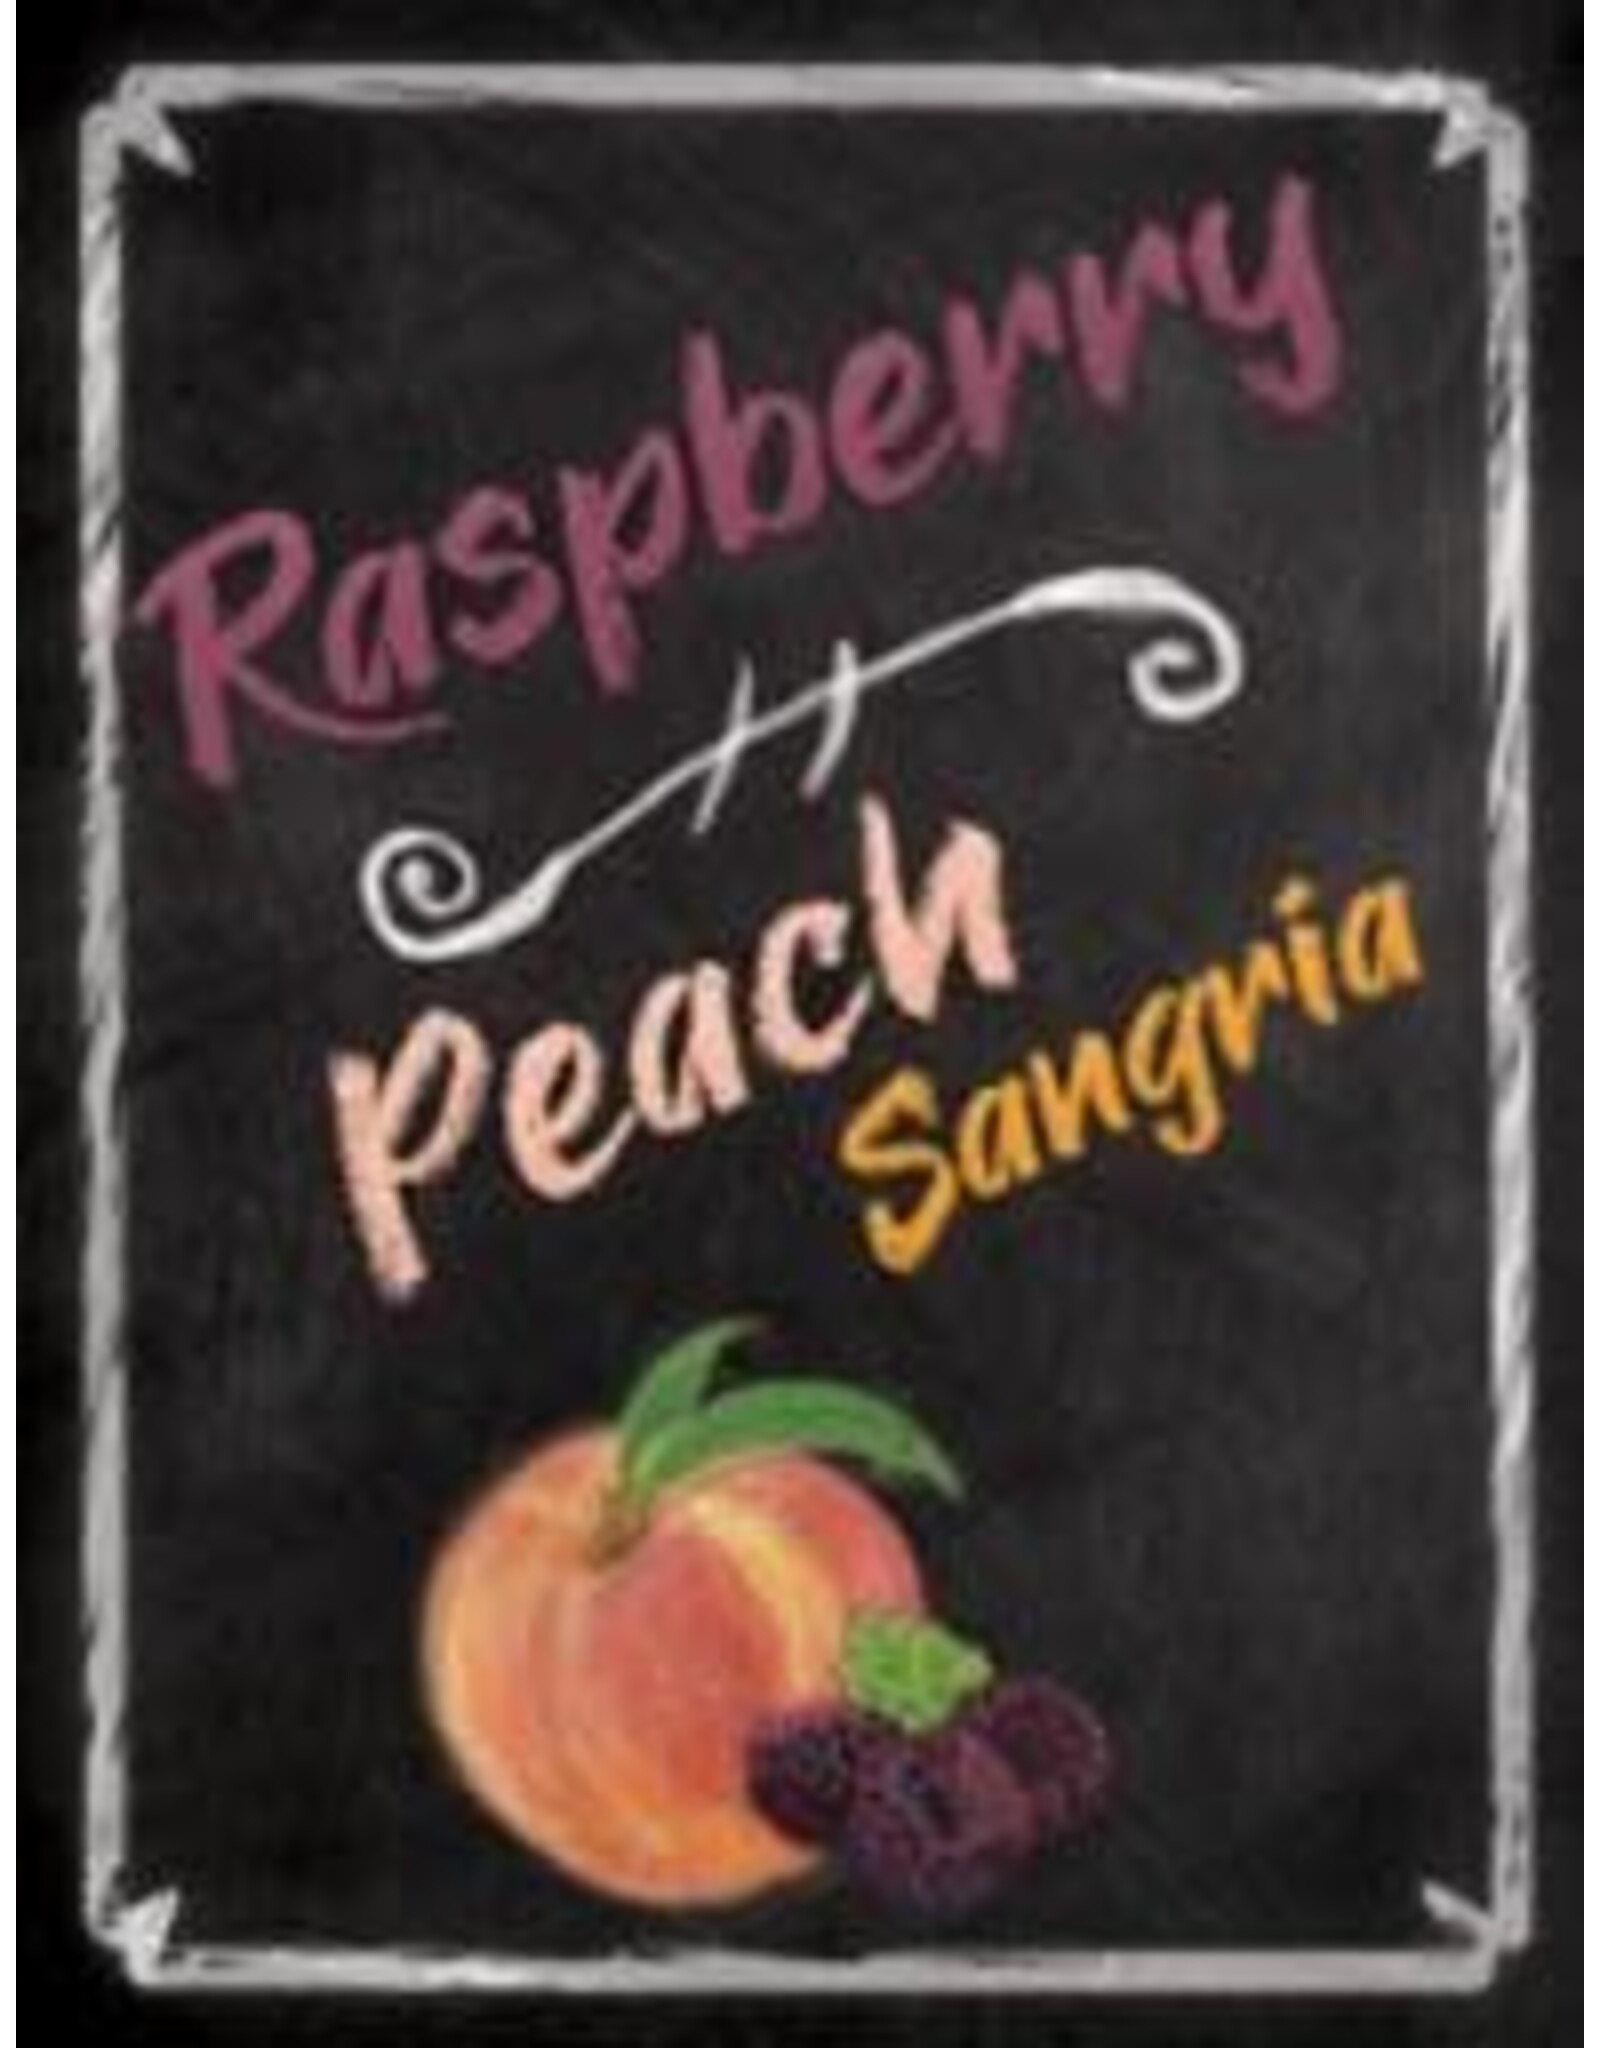 Raspberry Peach 30 ct Wine Labels